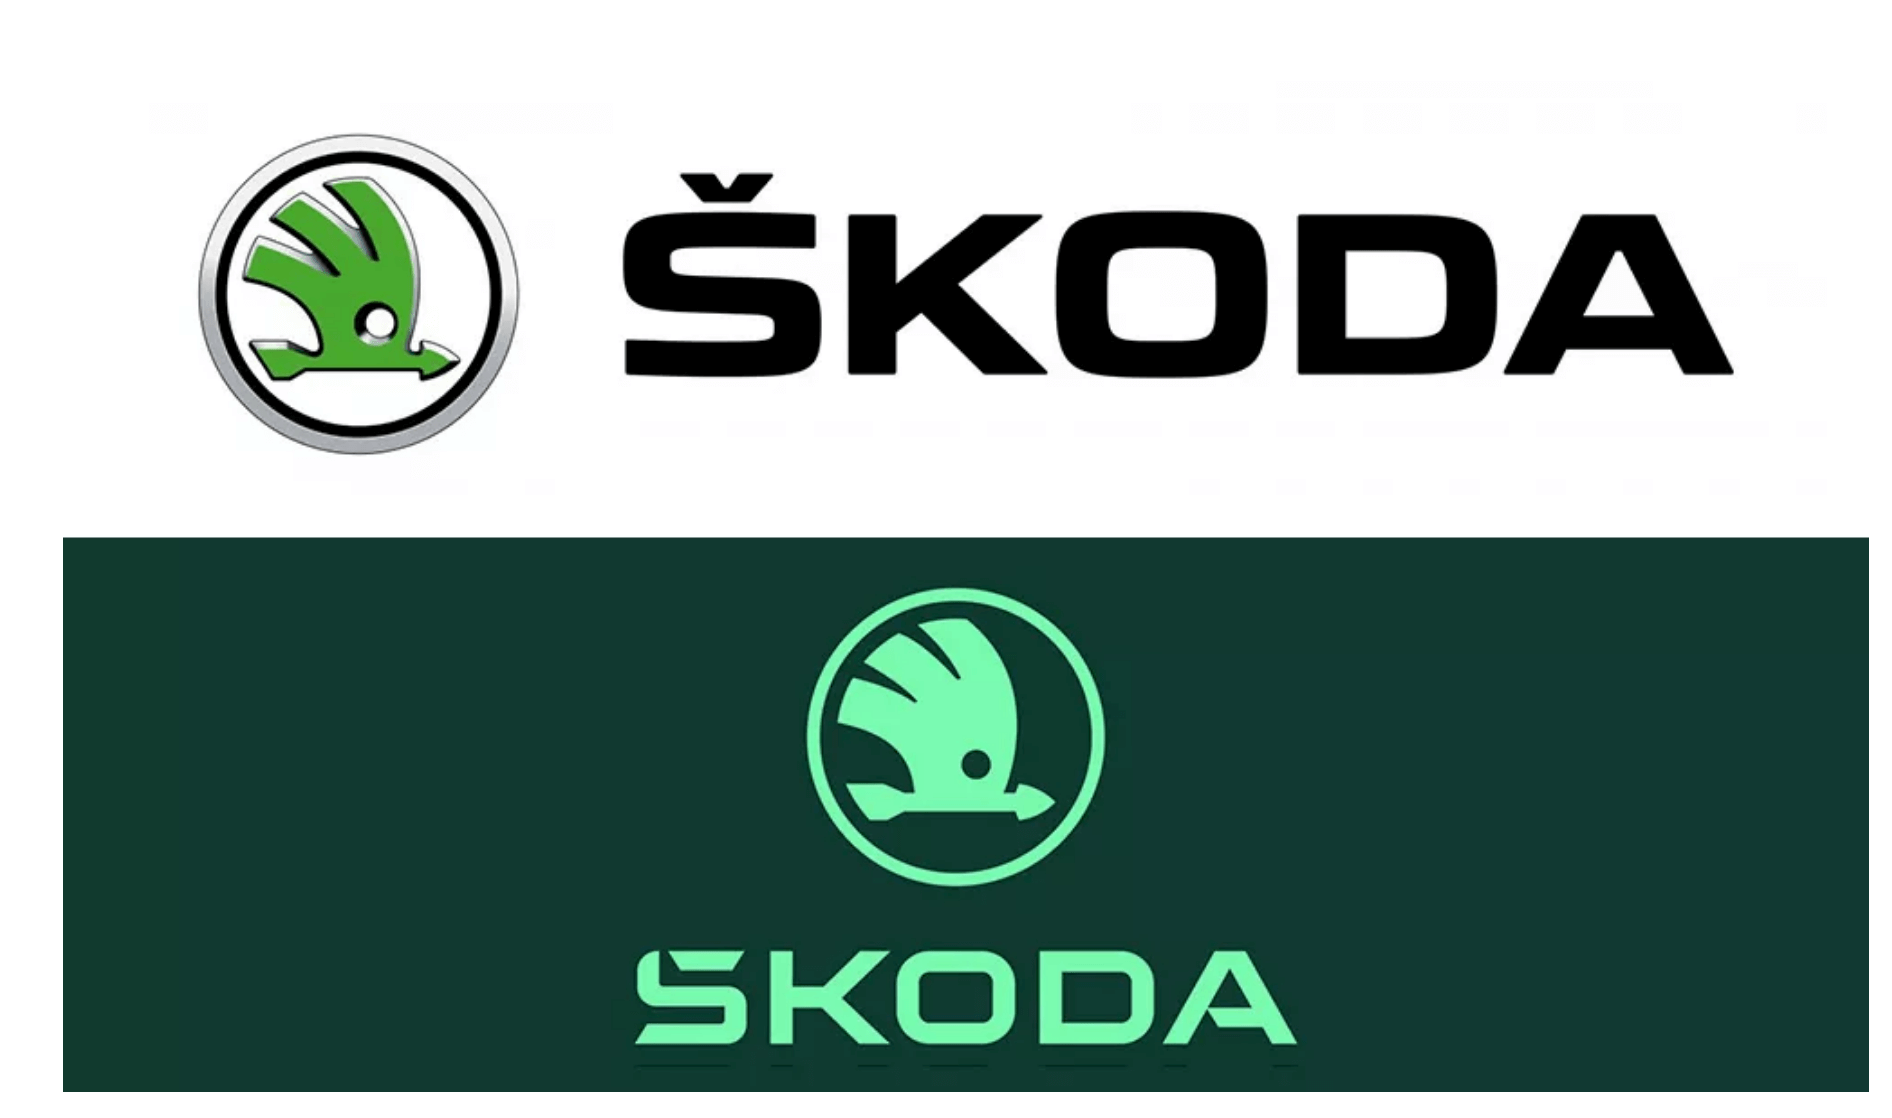 A Review of Skoda's Brand Identity